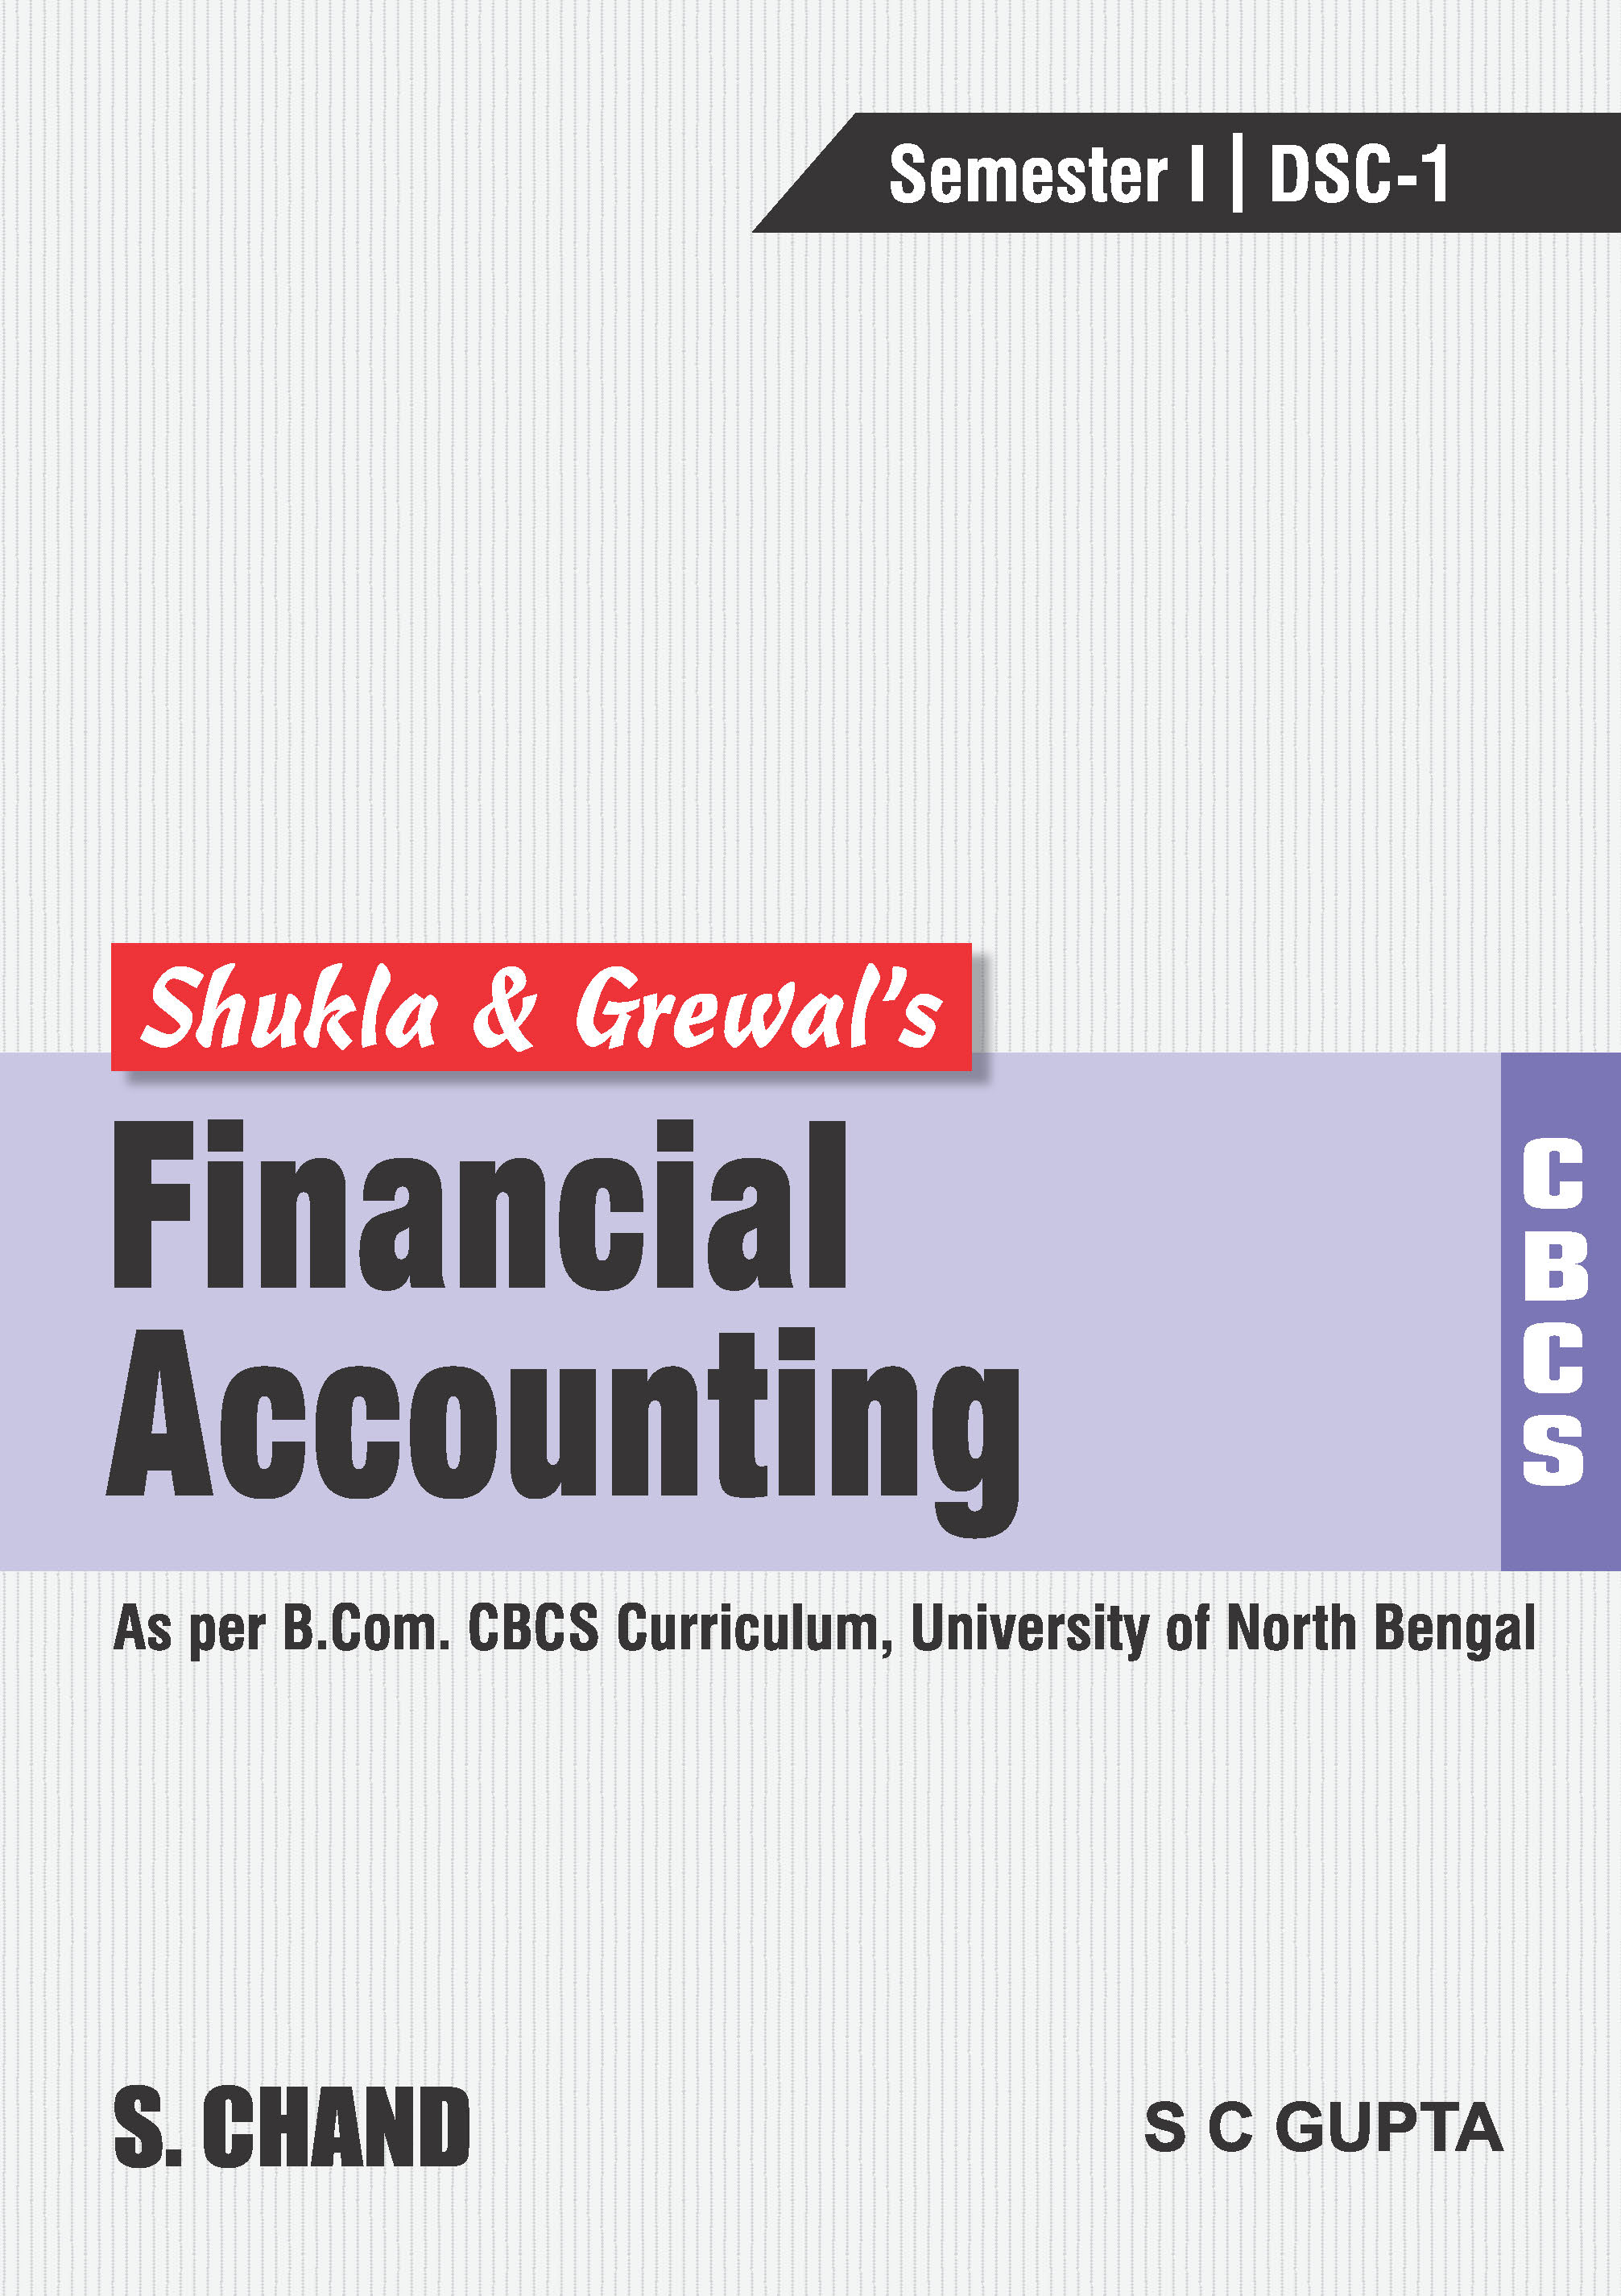 Financial Accounting [CBCS NBU]